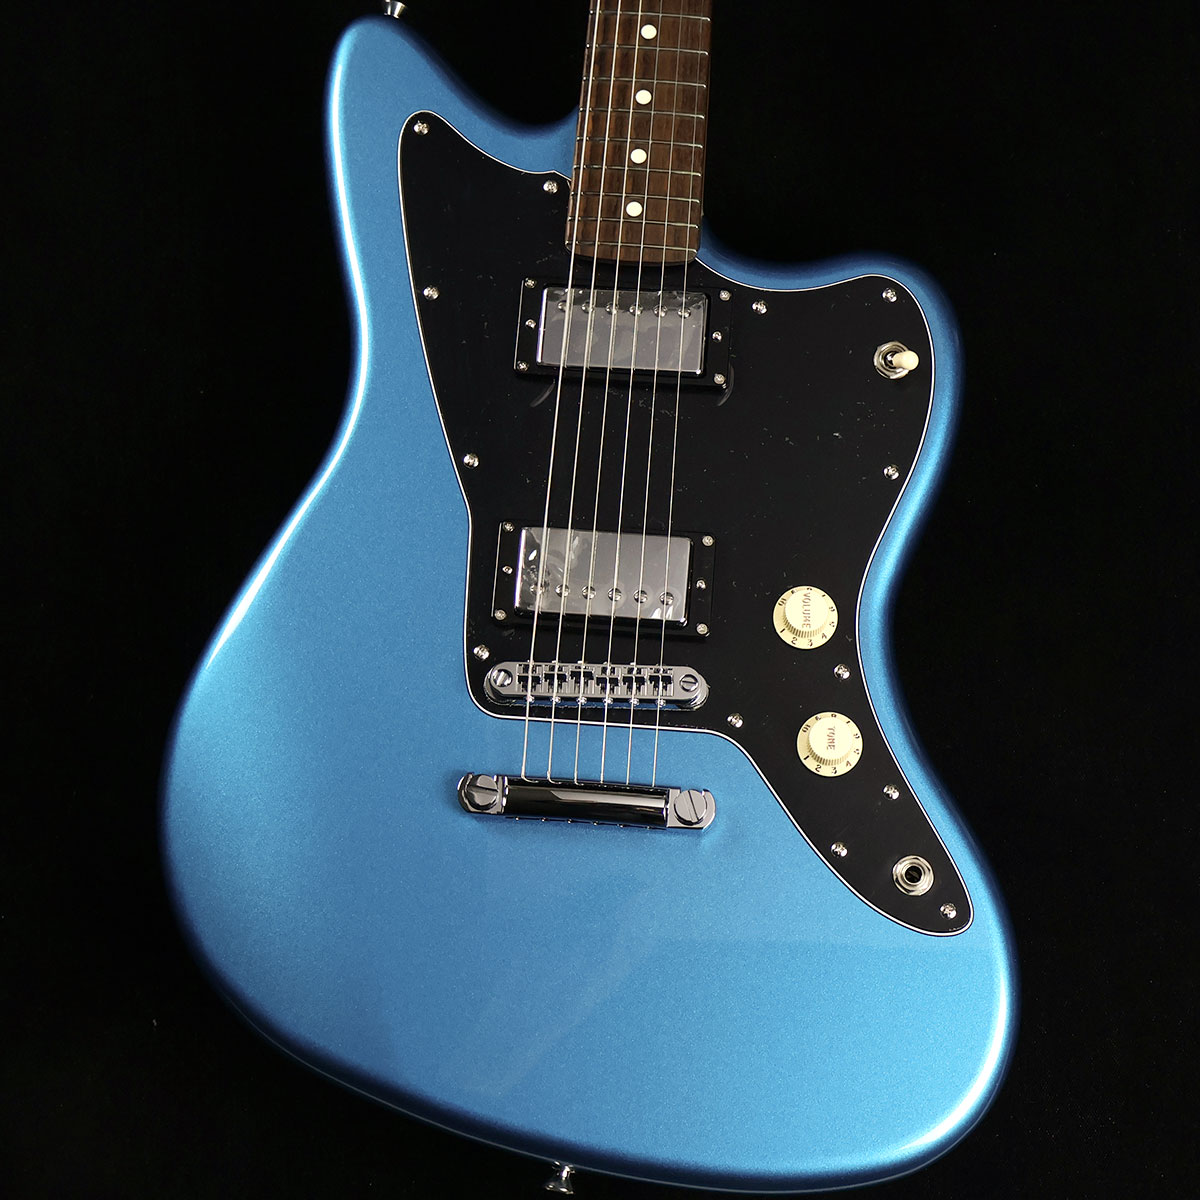 Fender フェンダー Made In Japan Limited Adjusto-Matic Jazzmaster HH Lake Placid Blue 限定モデル ジャズマスター 2ハム【未展示品・